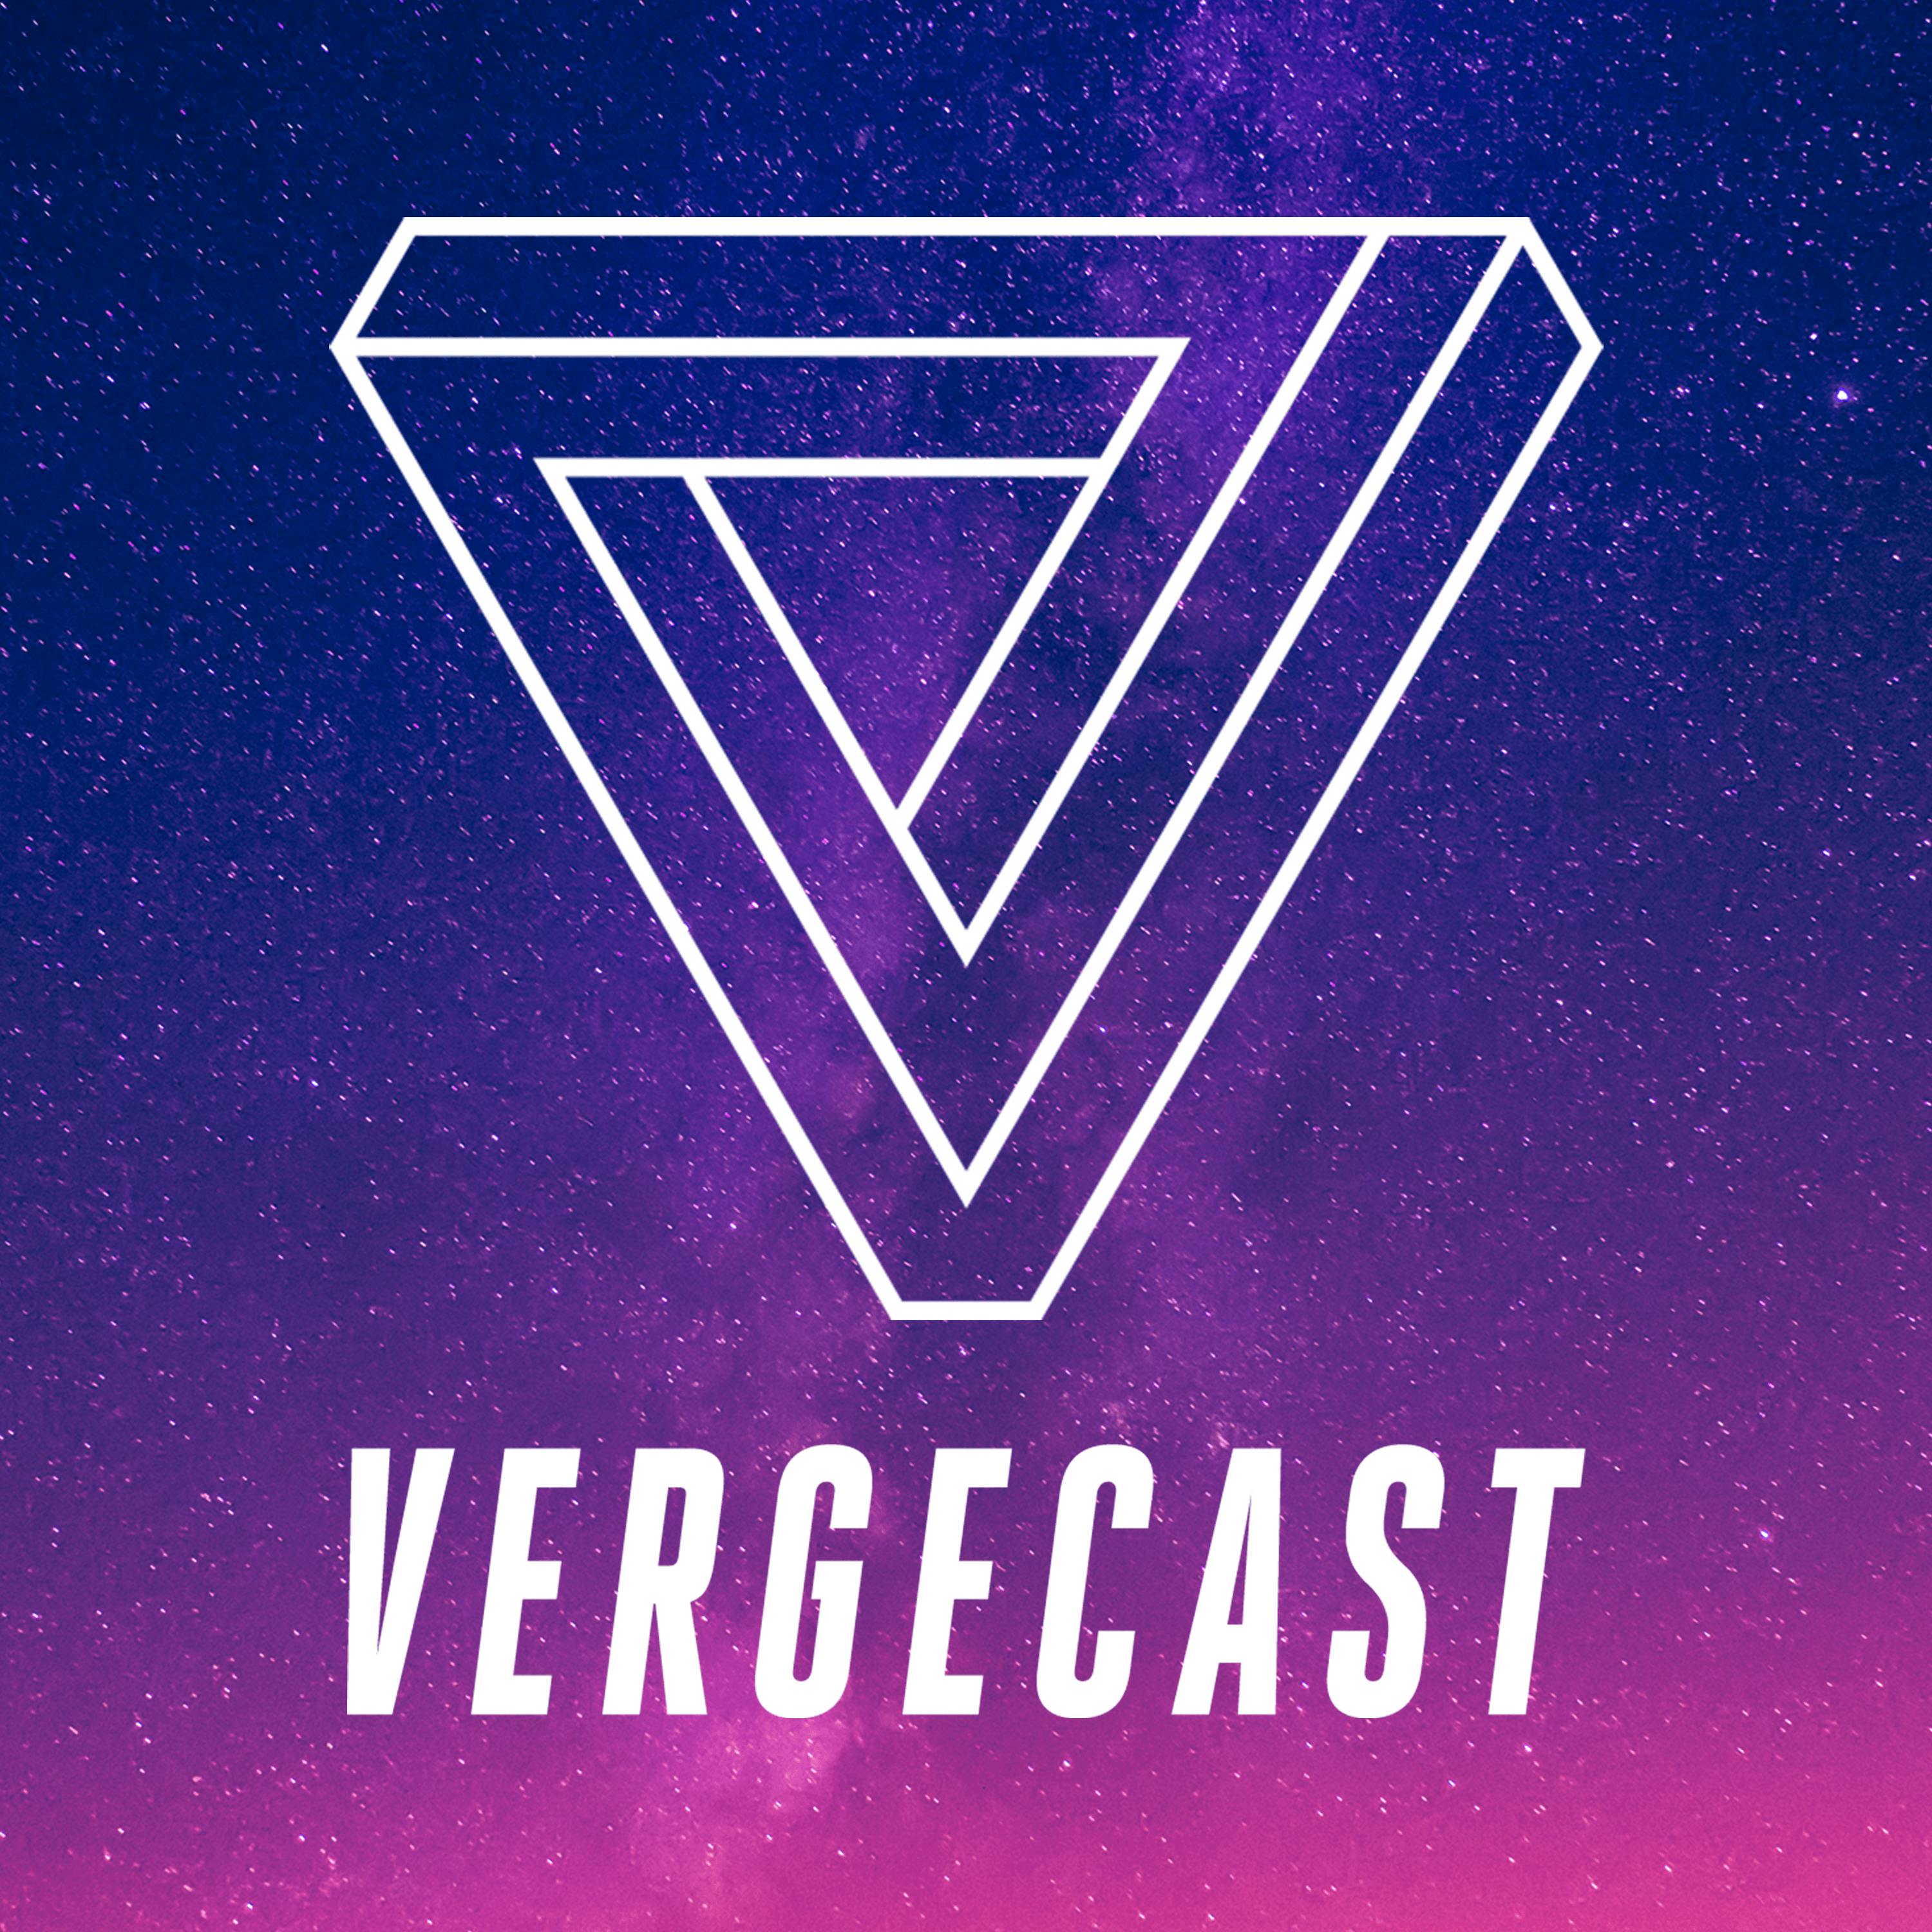 The Vergecast logo